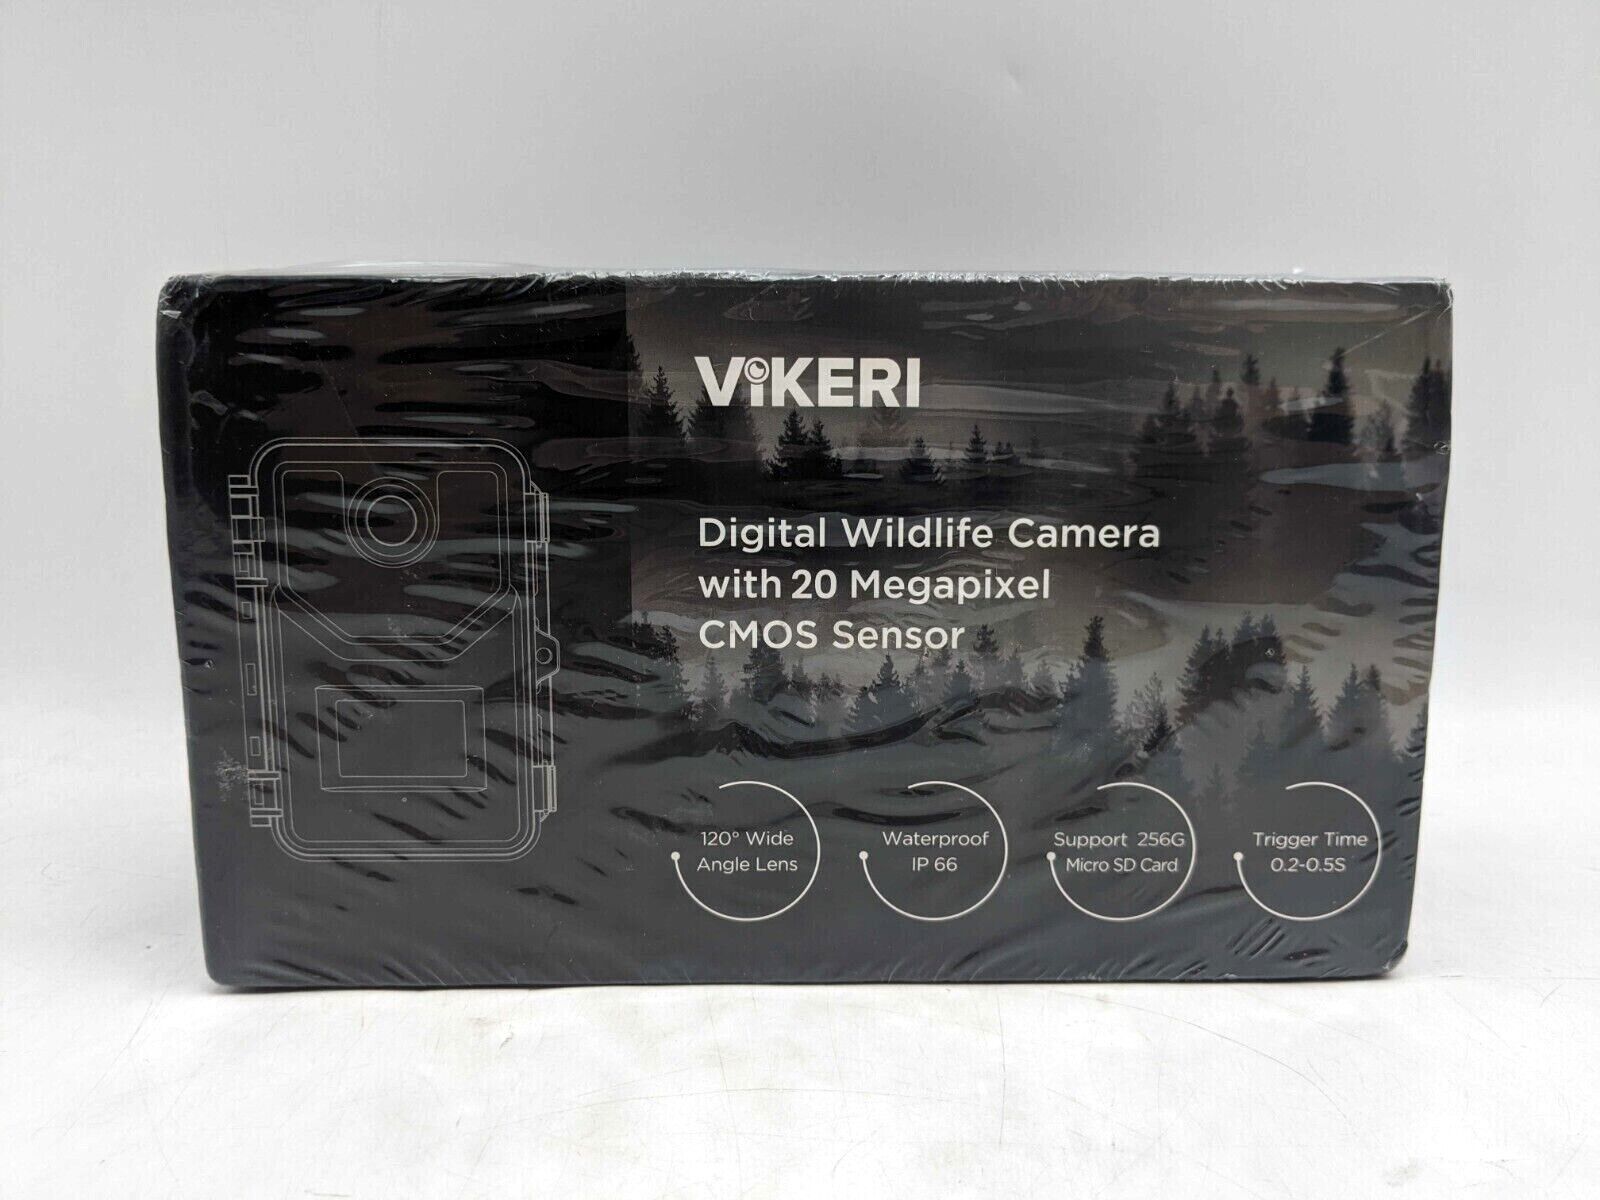 Vikeri Digital Wildlife Camera 1520p VGA HD Video Recording 20MP -DG0241